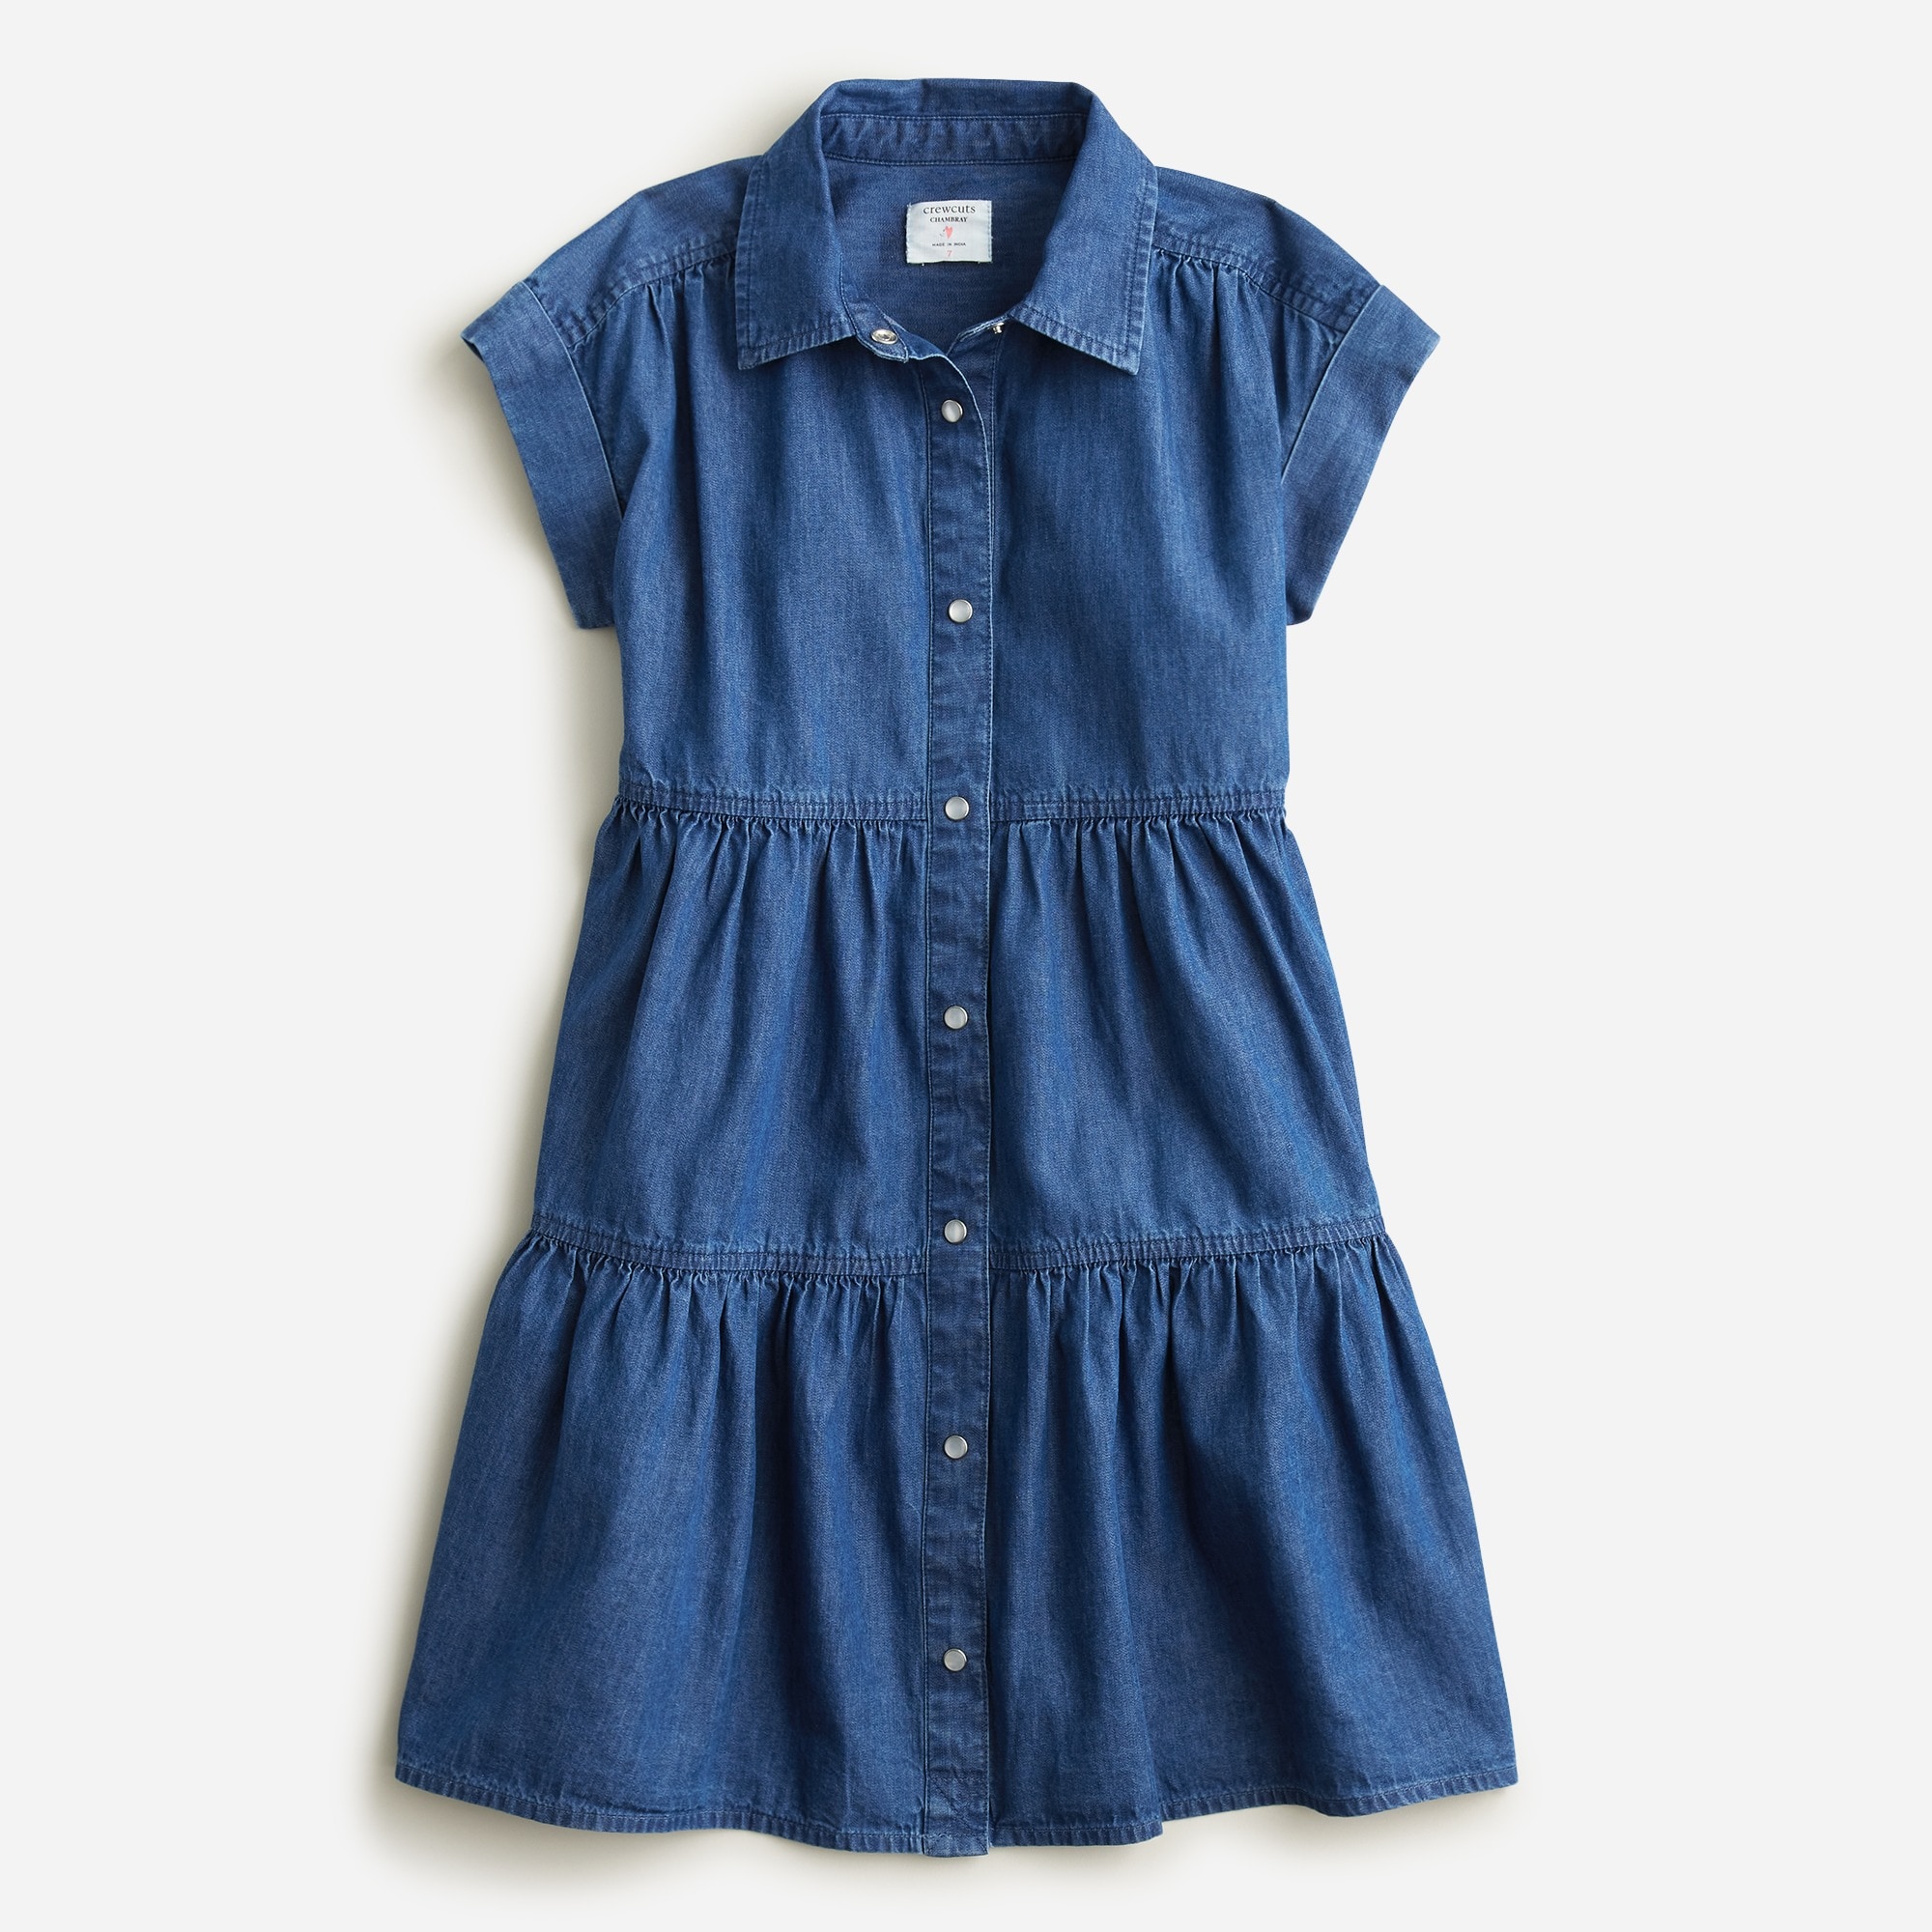 Jcrew Girls button-front chambray shirtdress